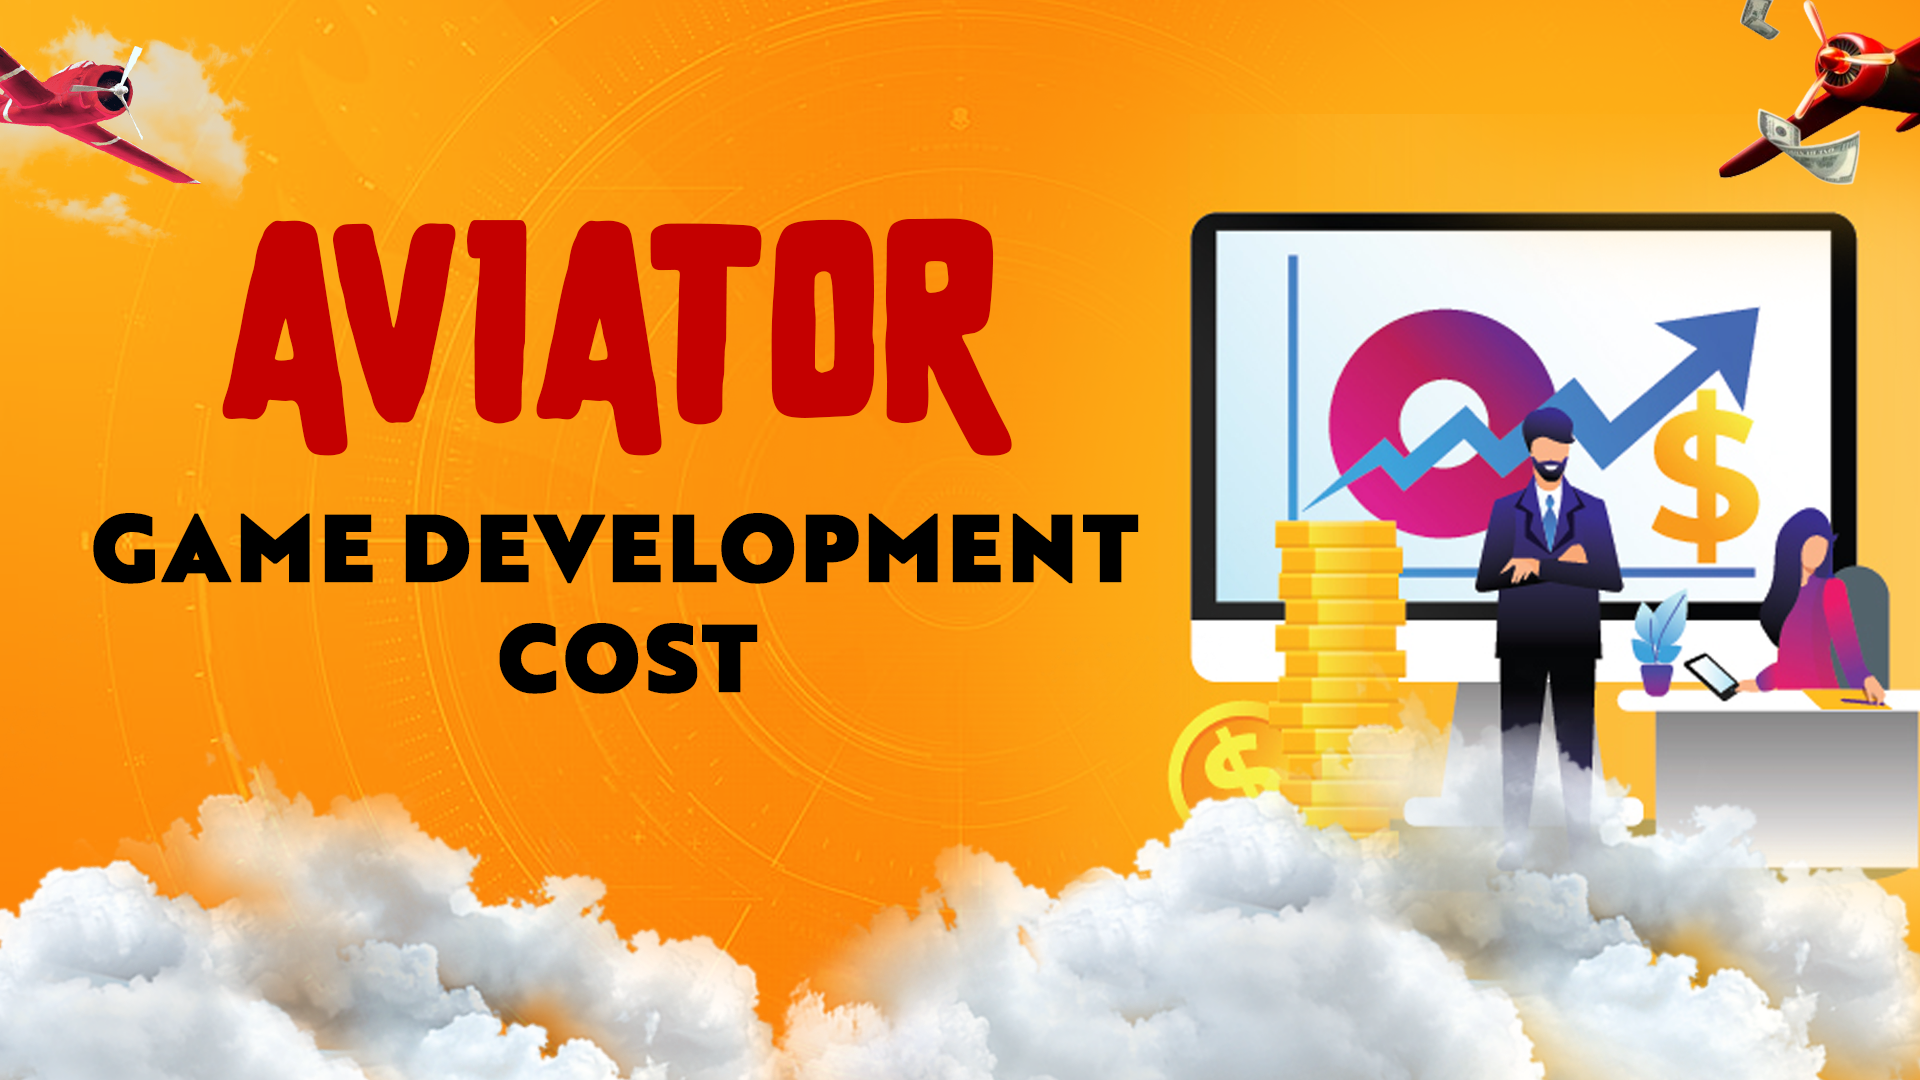 Aviator Game Development Cost